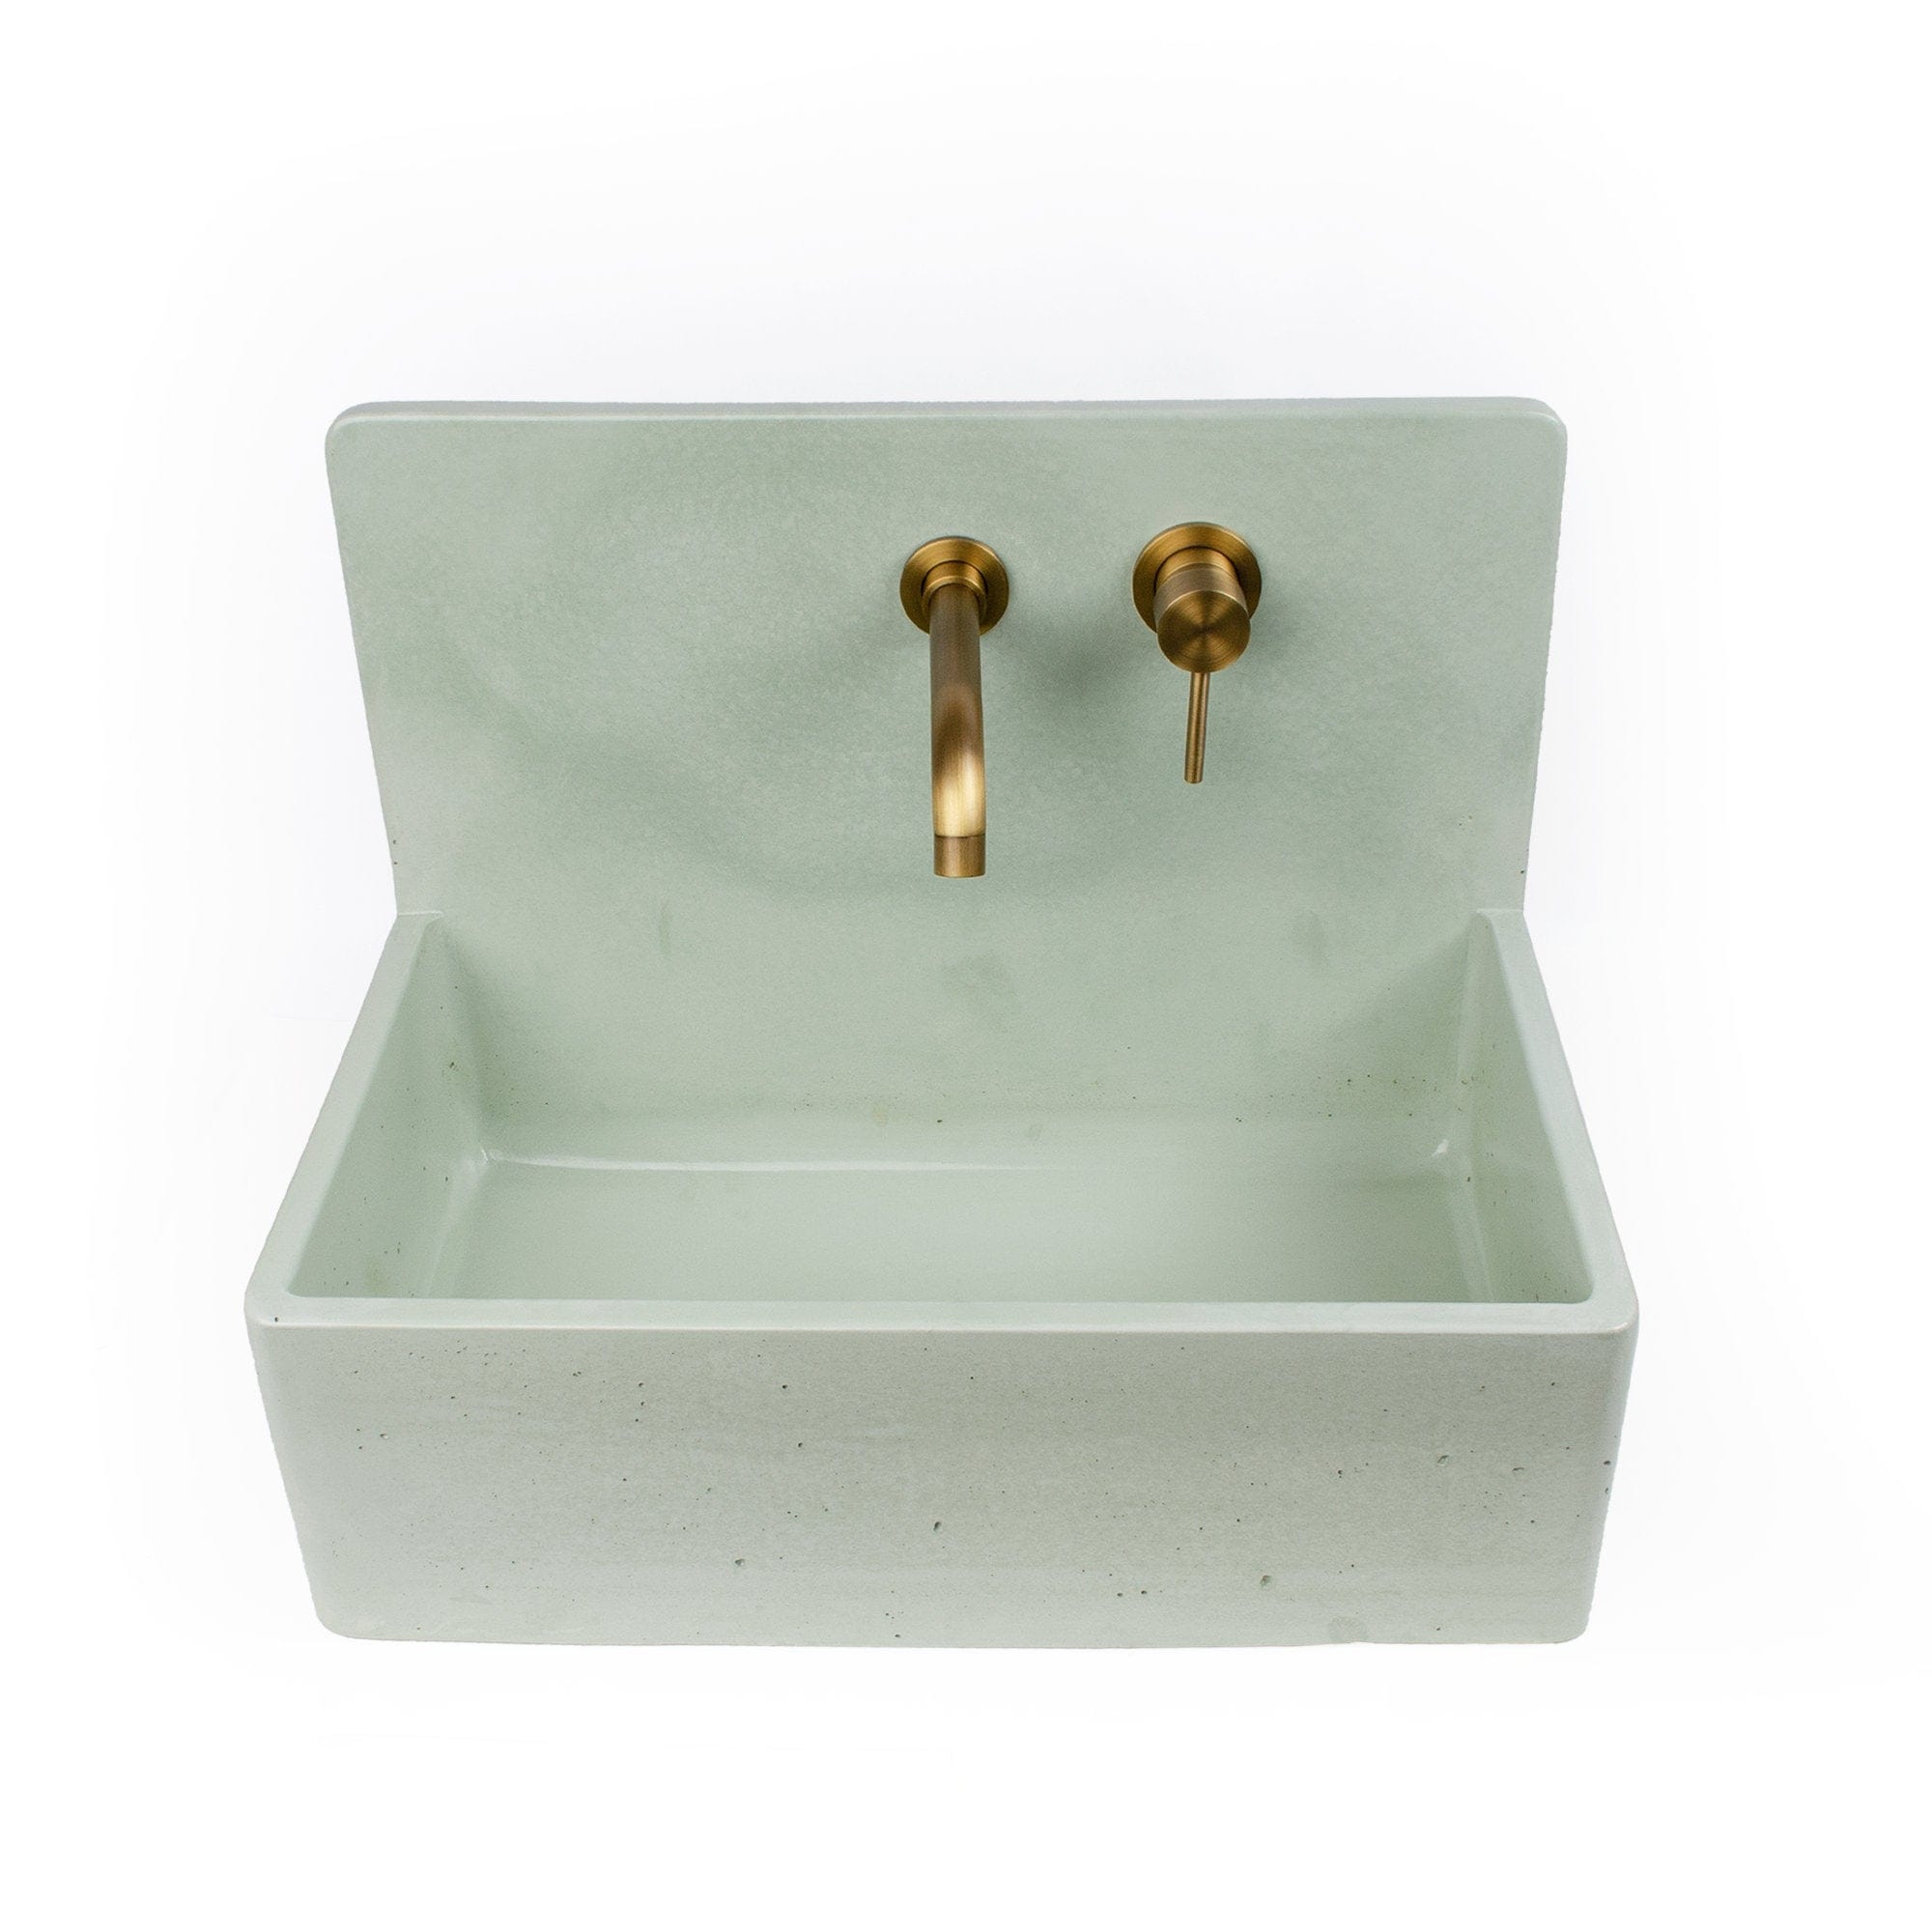 Concretti Designs Handmade San Francisco Concrete Vessel Sink/Washbasin, Faucet Included.